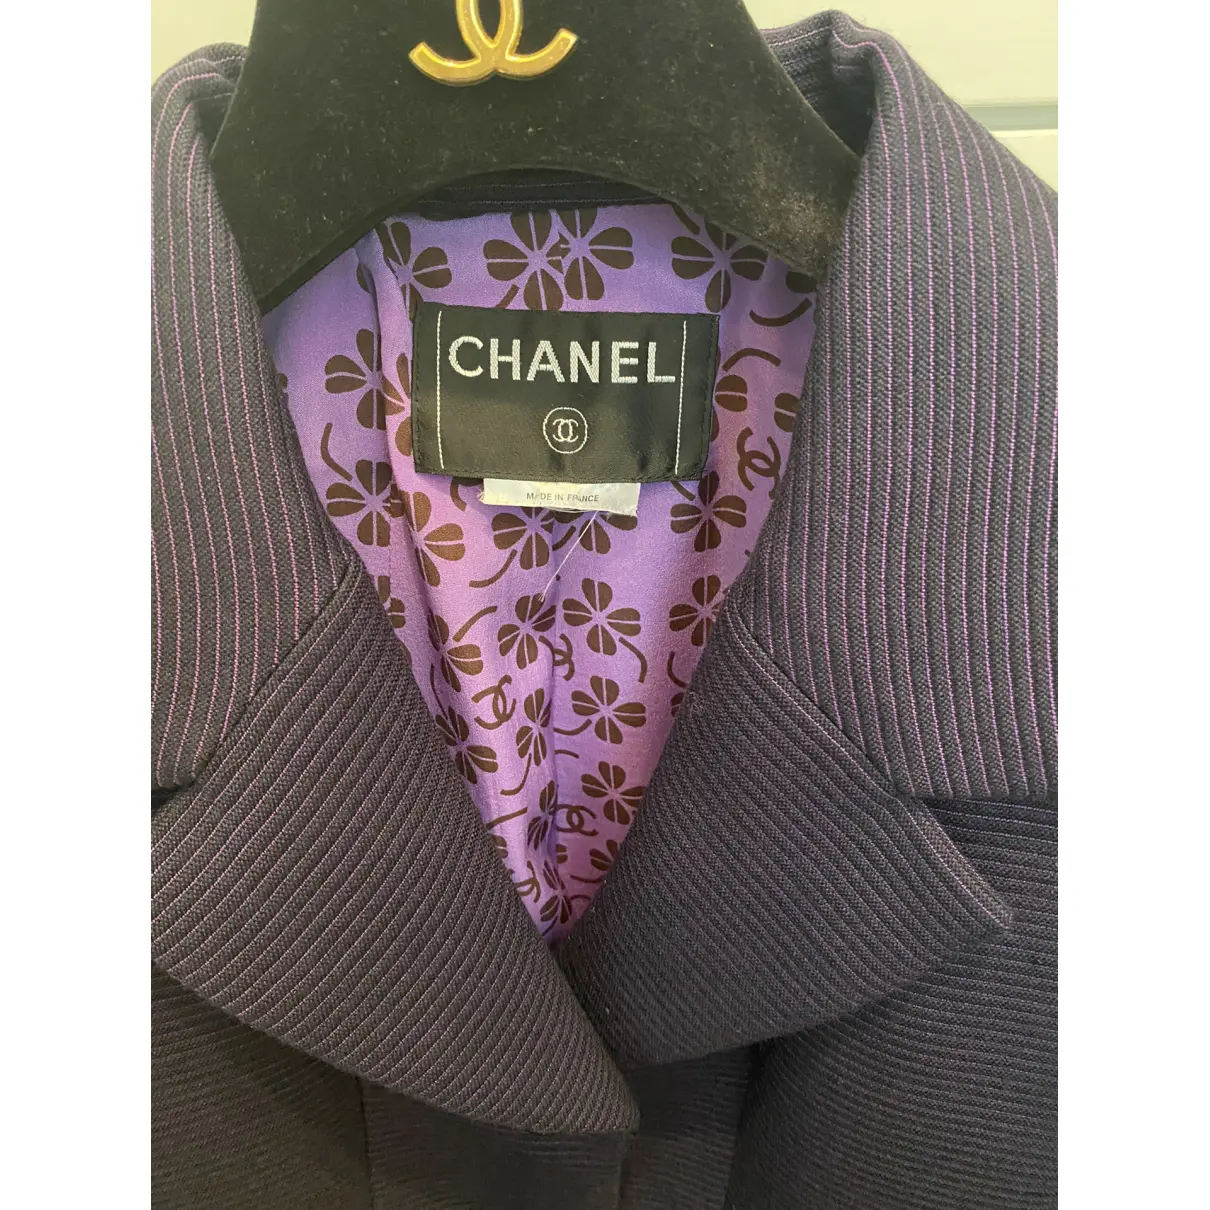 Buy Chanel Wool short vest online